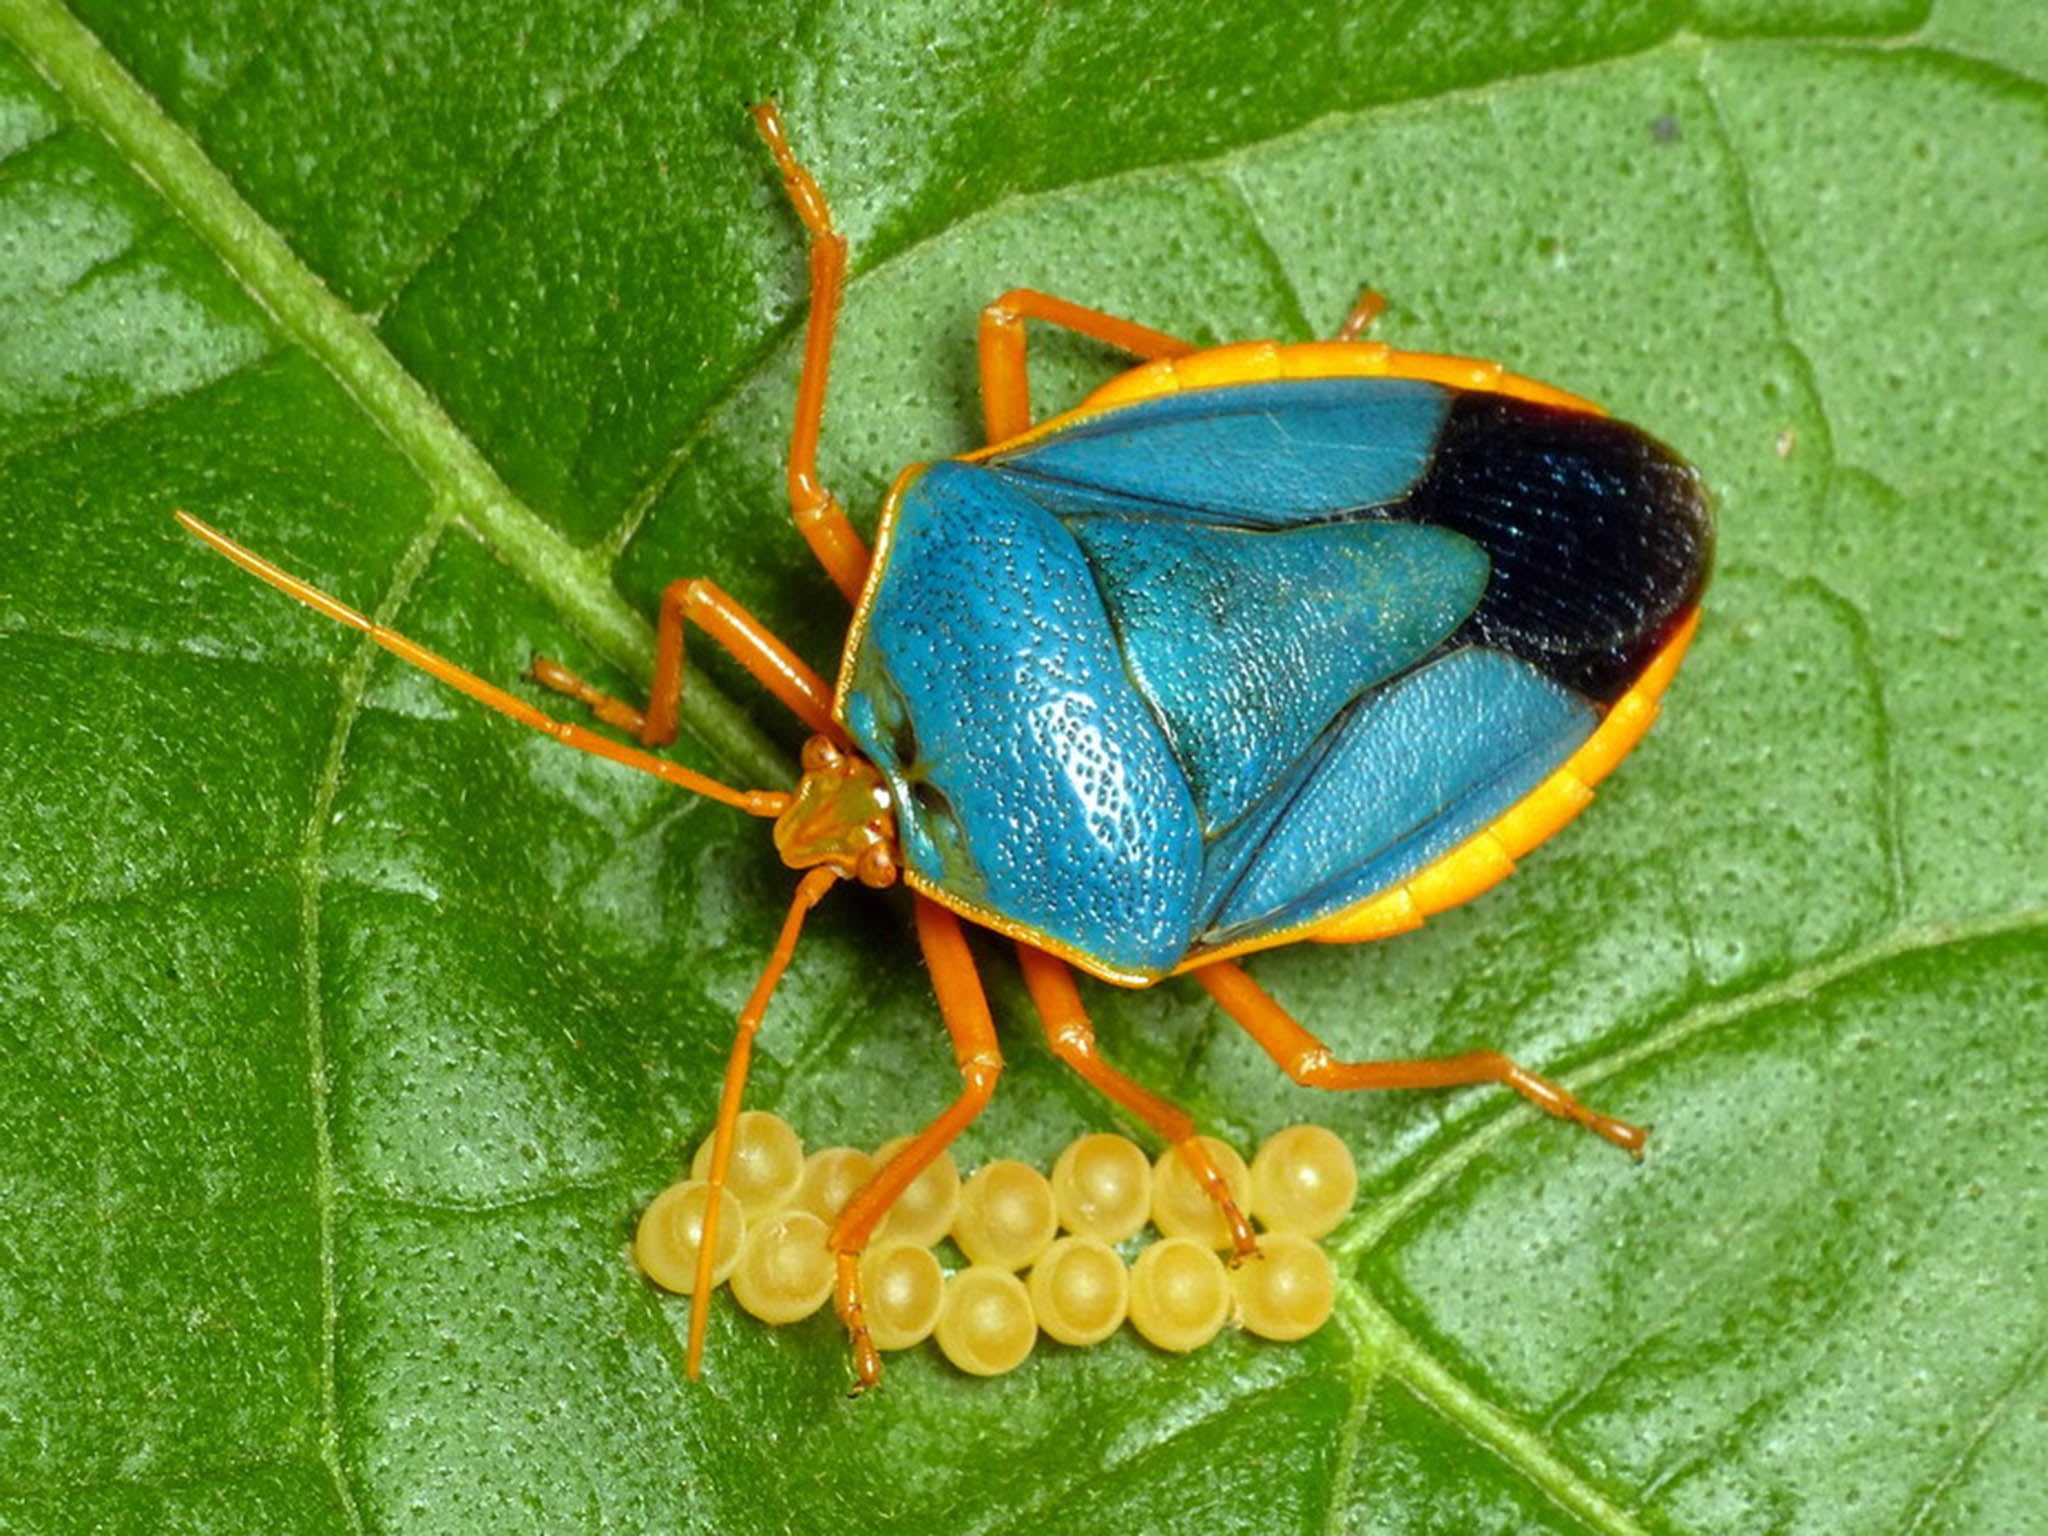 A shield bug guards her eggs in the Ecuadorean rainforest